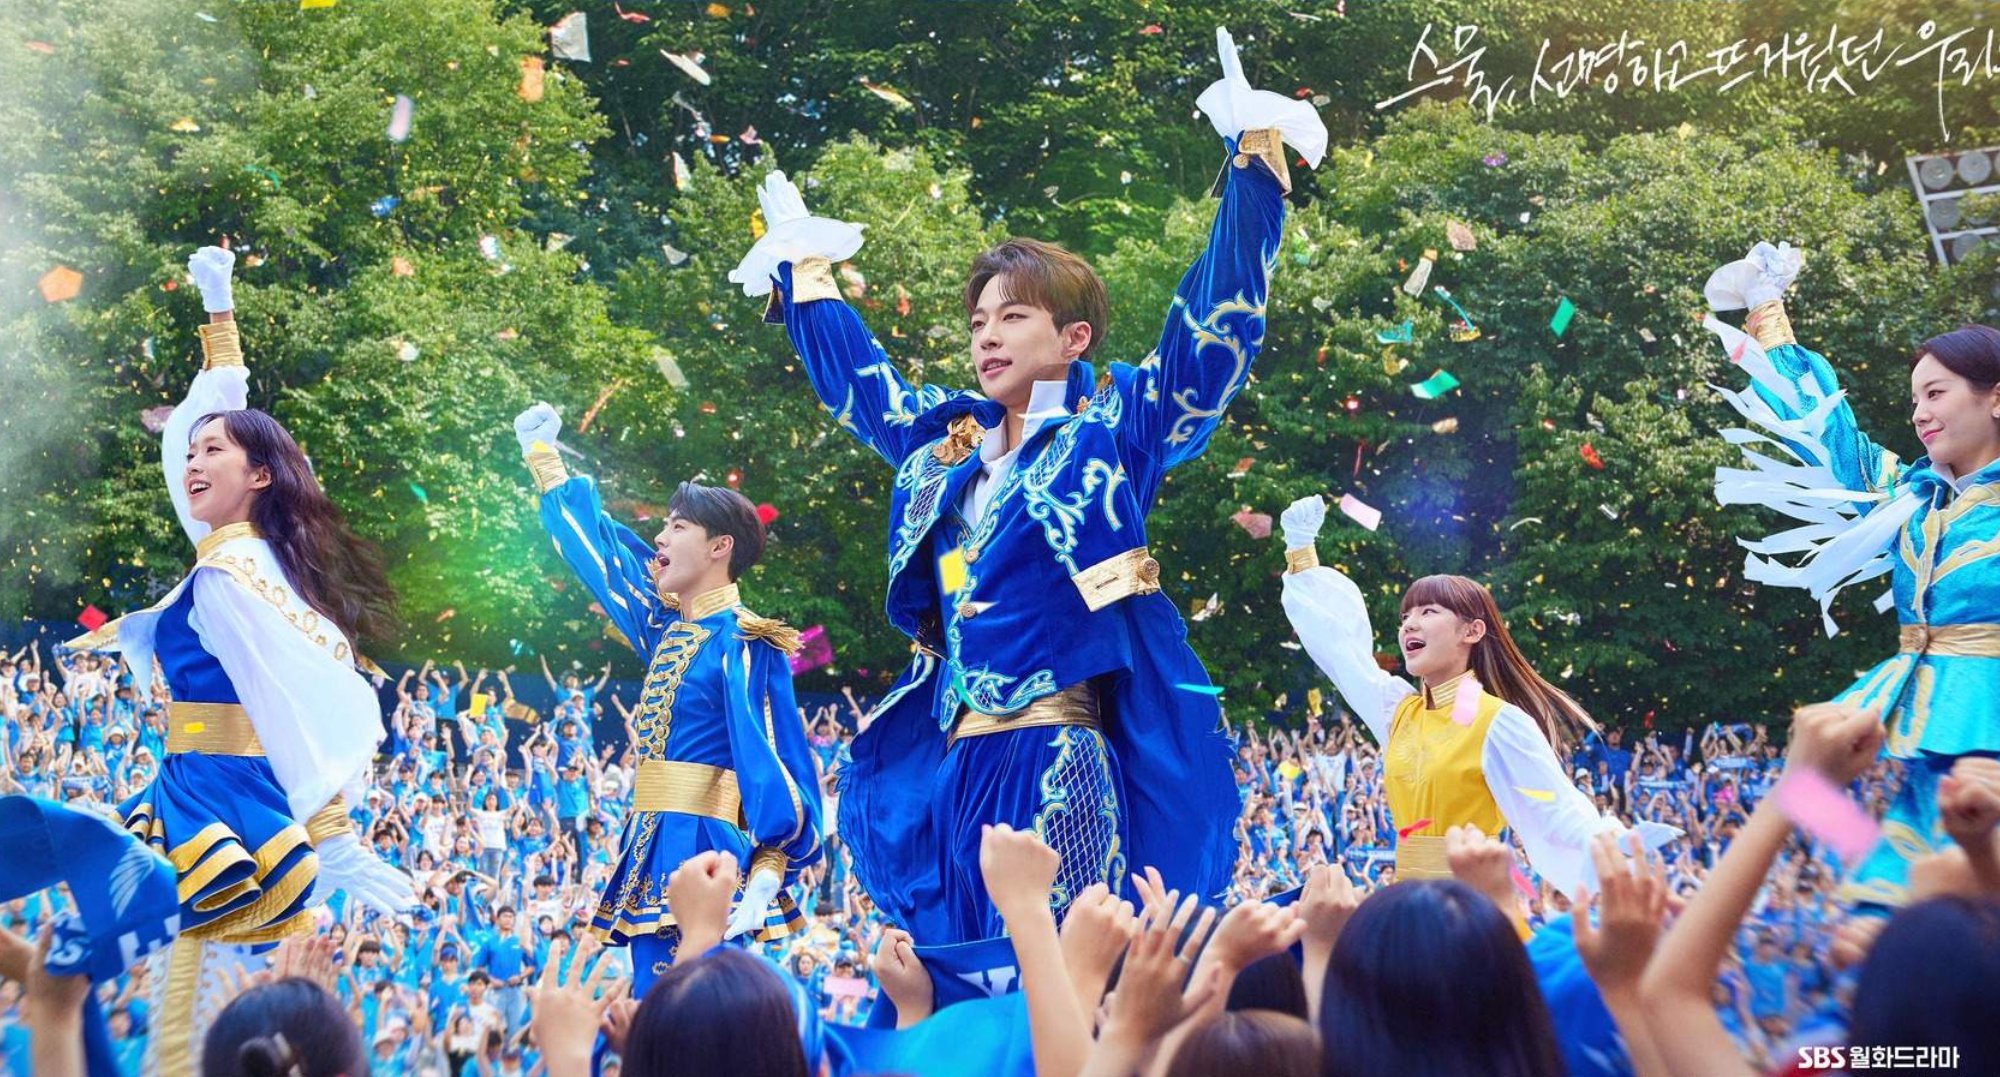 Cheer Up': Is The 2022 K-Drama Based On Yonsei University'S Cheer Team?